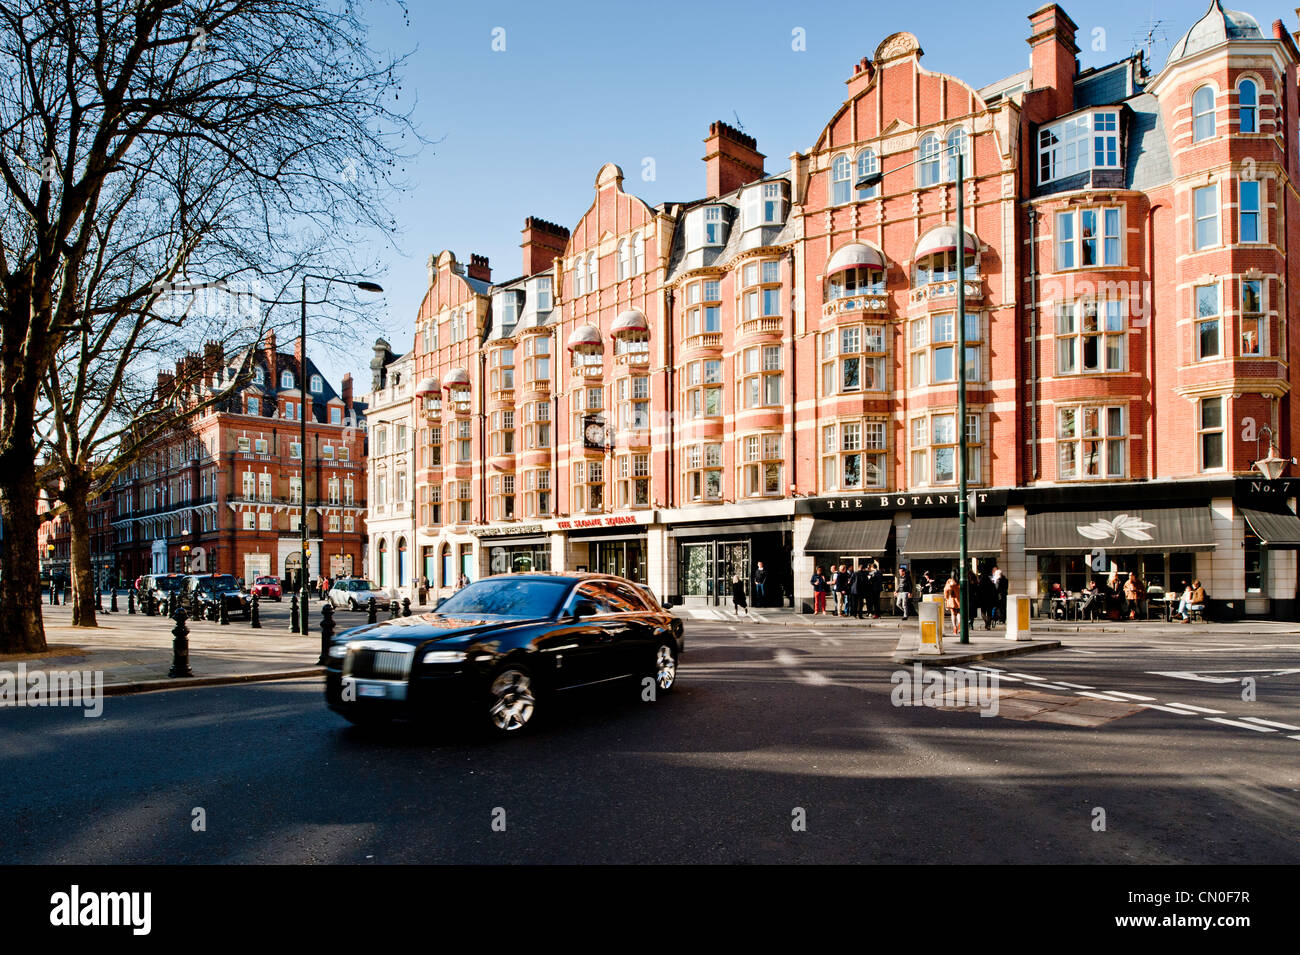 Sloane Square, London, United Kingdom Stock Photo